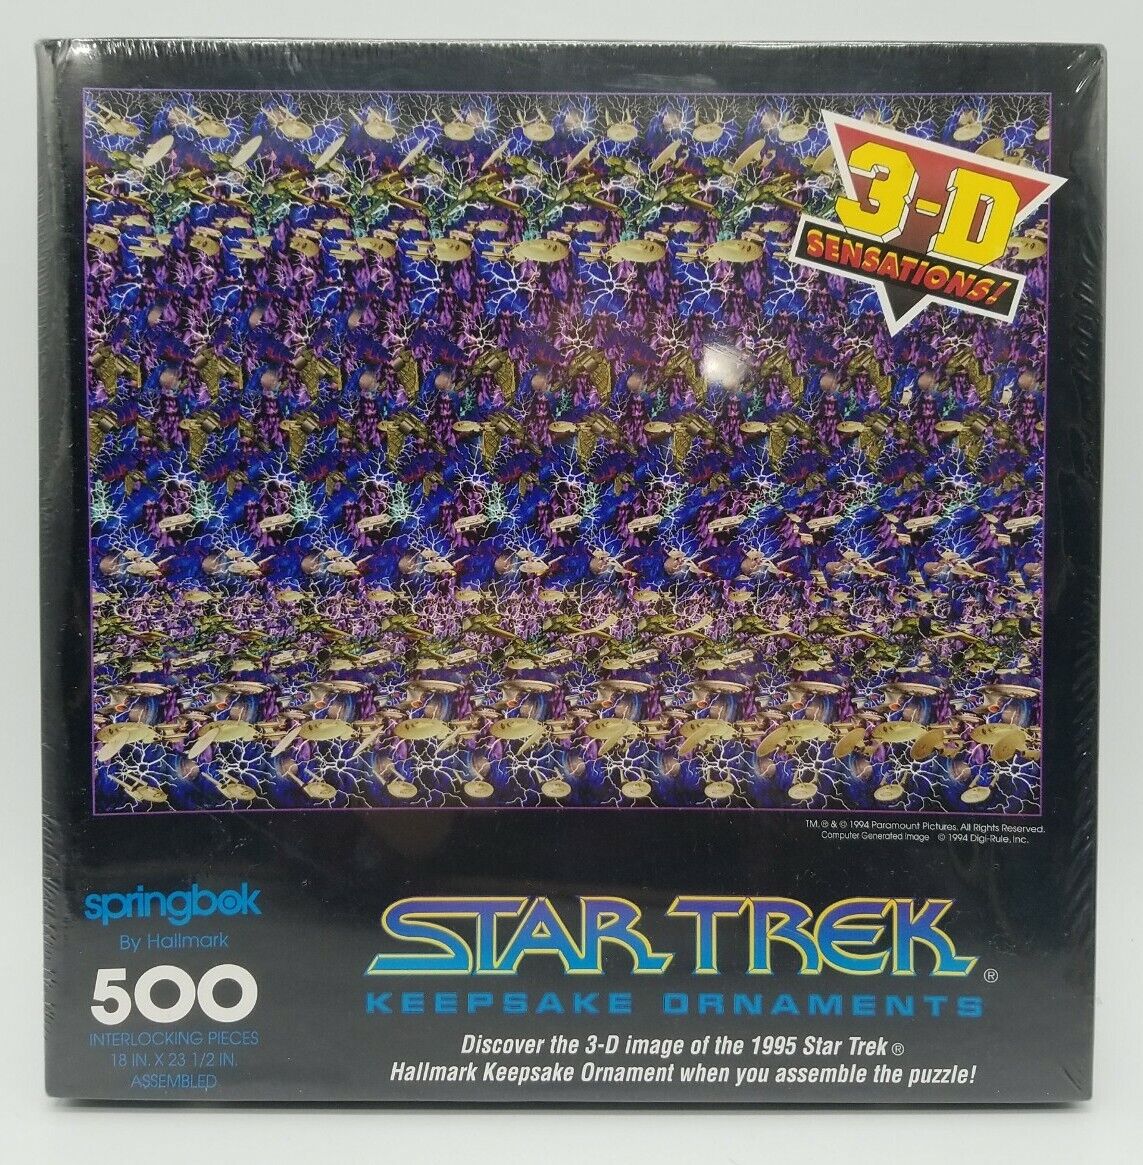 Star Trek Springbok 1994 3D Sensations Hallmark Ornaments 500 pcs Jigsaw Puzzle